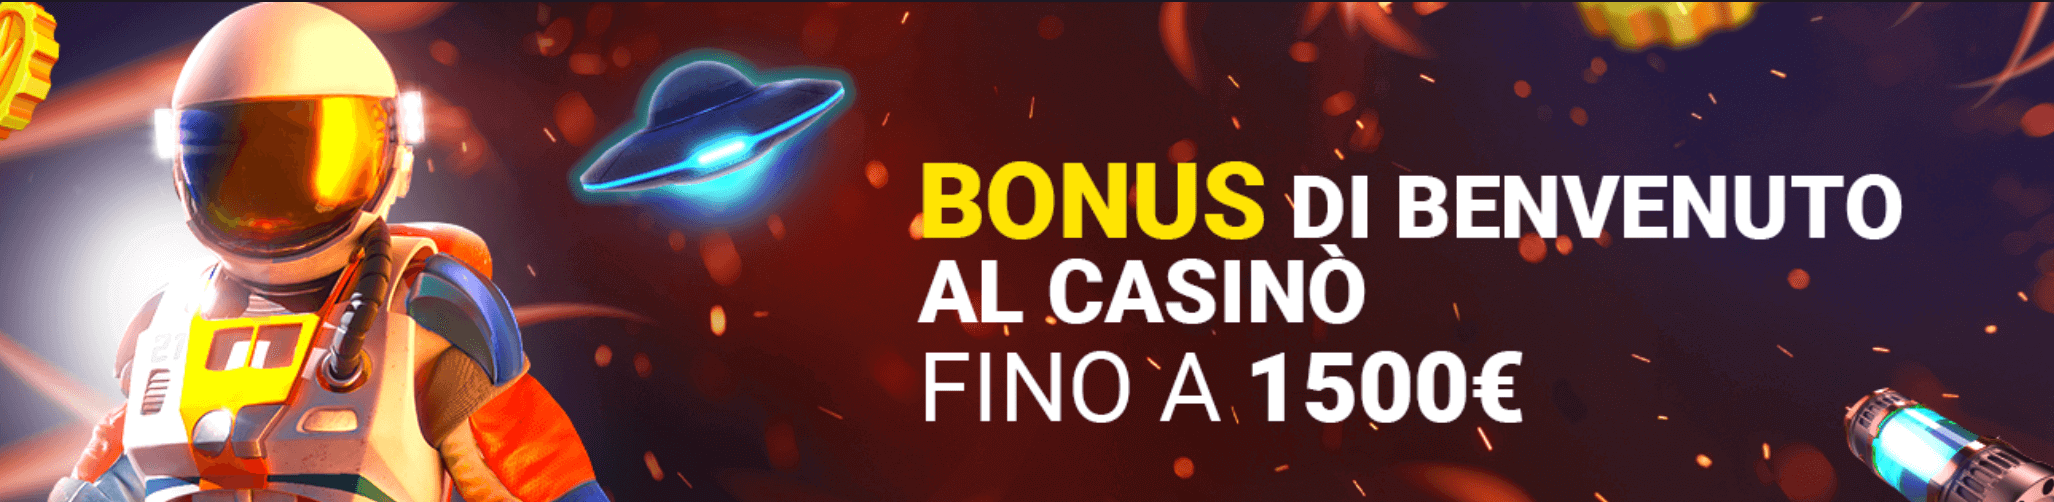 Freshbet Casino Bonus Benvenuto